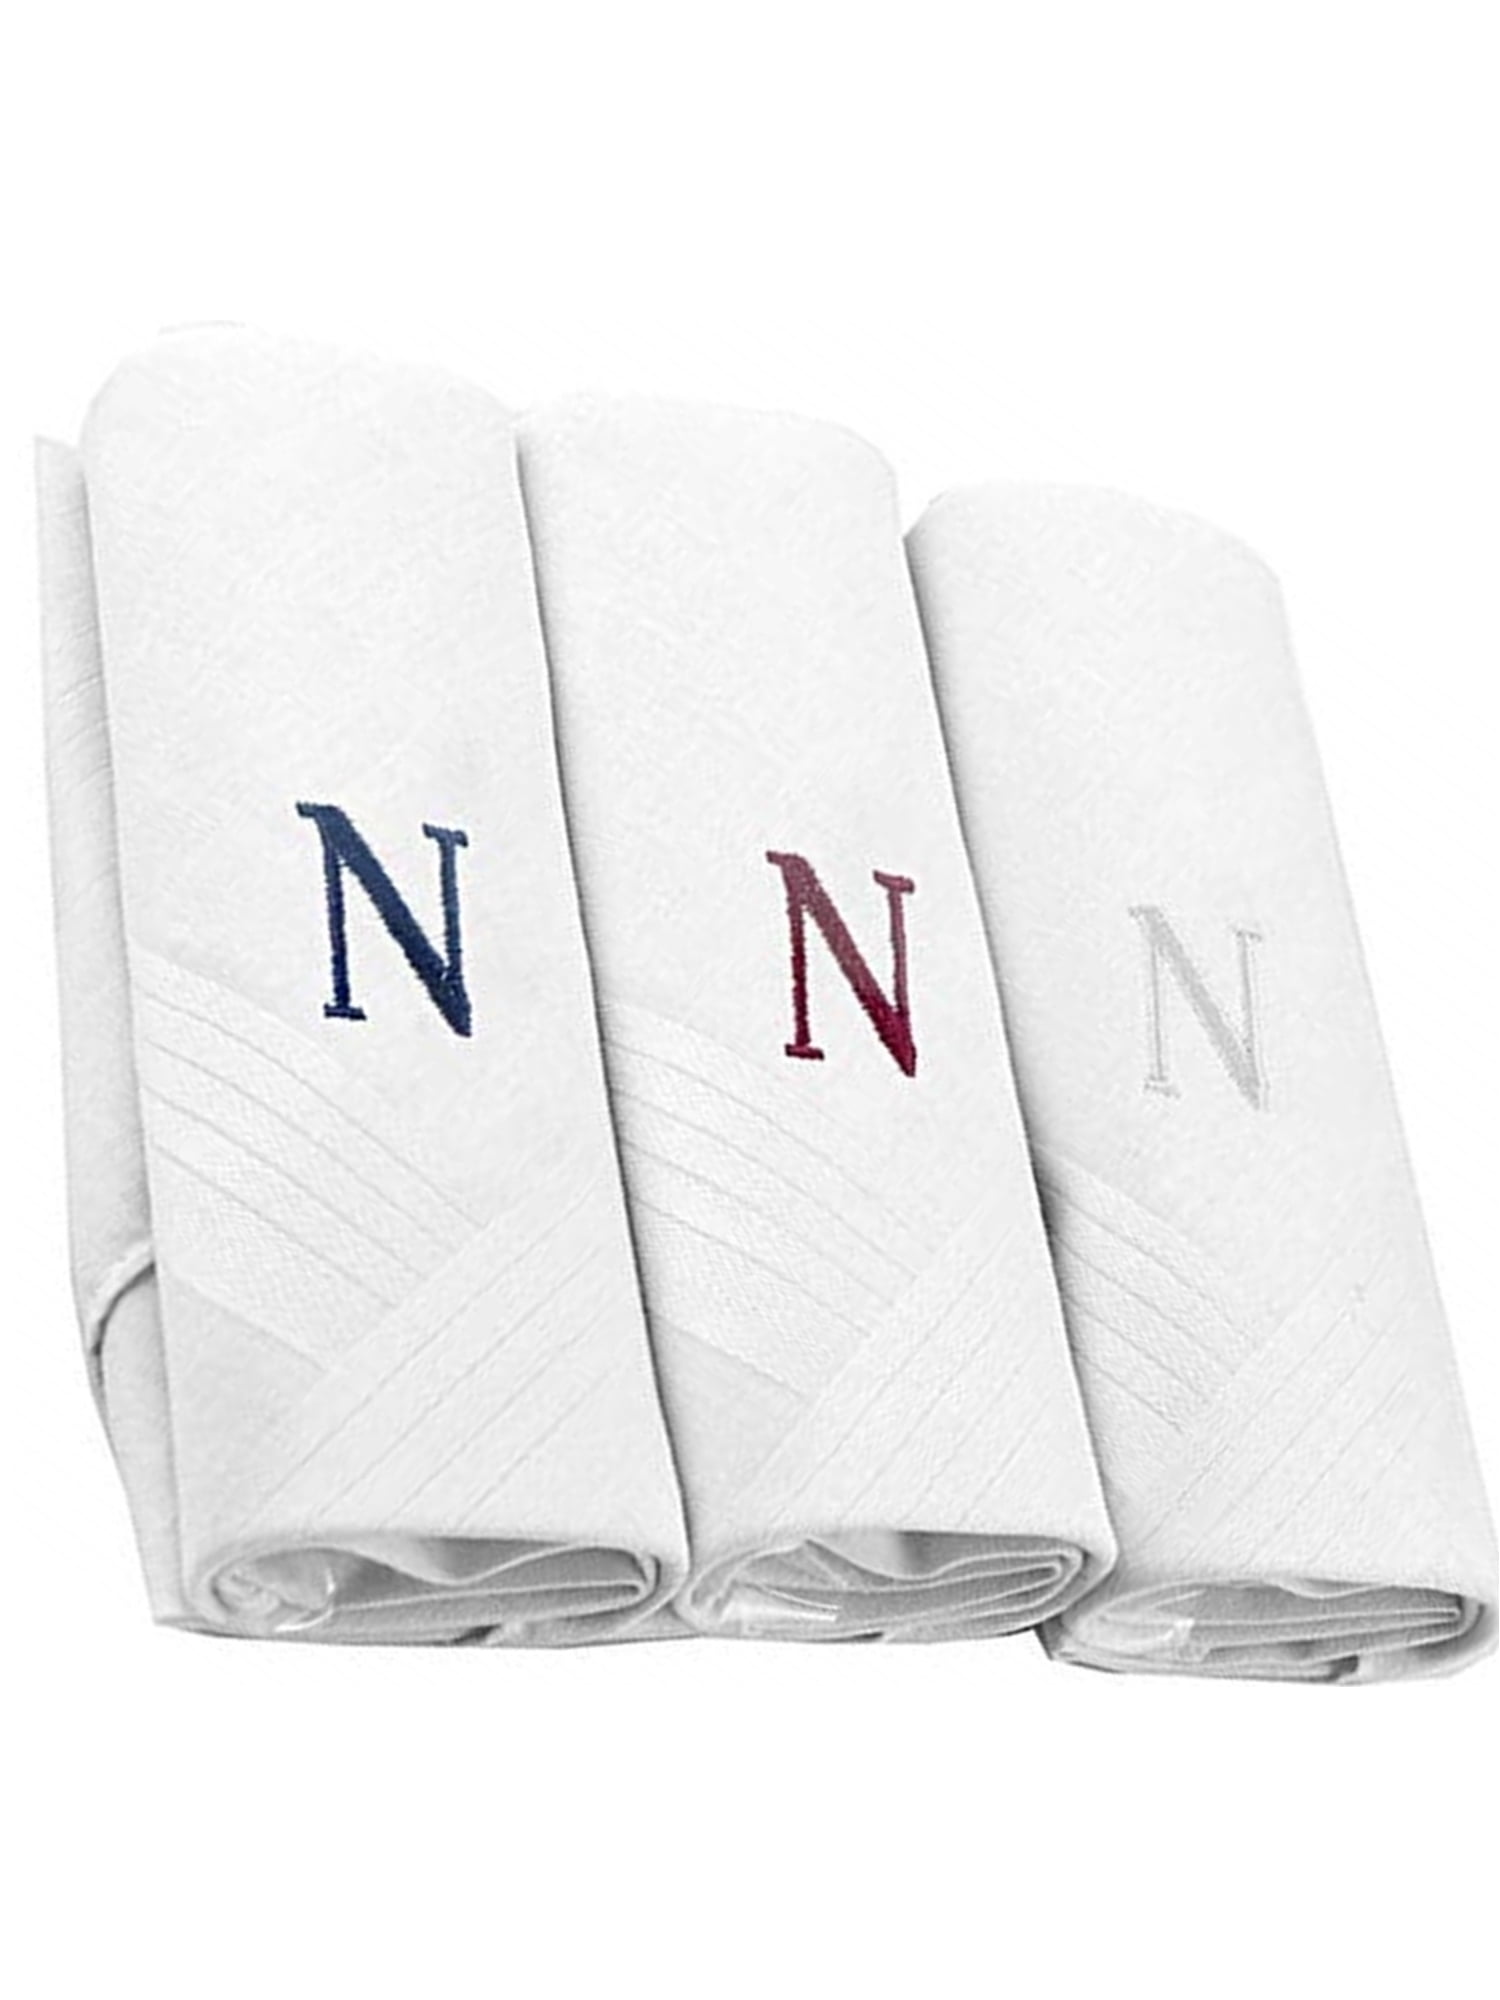 Monogram Initial Letter Personalised Embroidered Handkerchief Ladies Men's White 